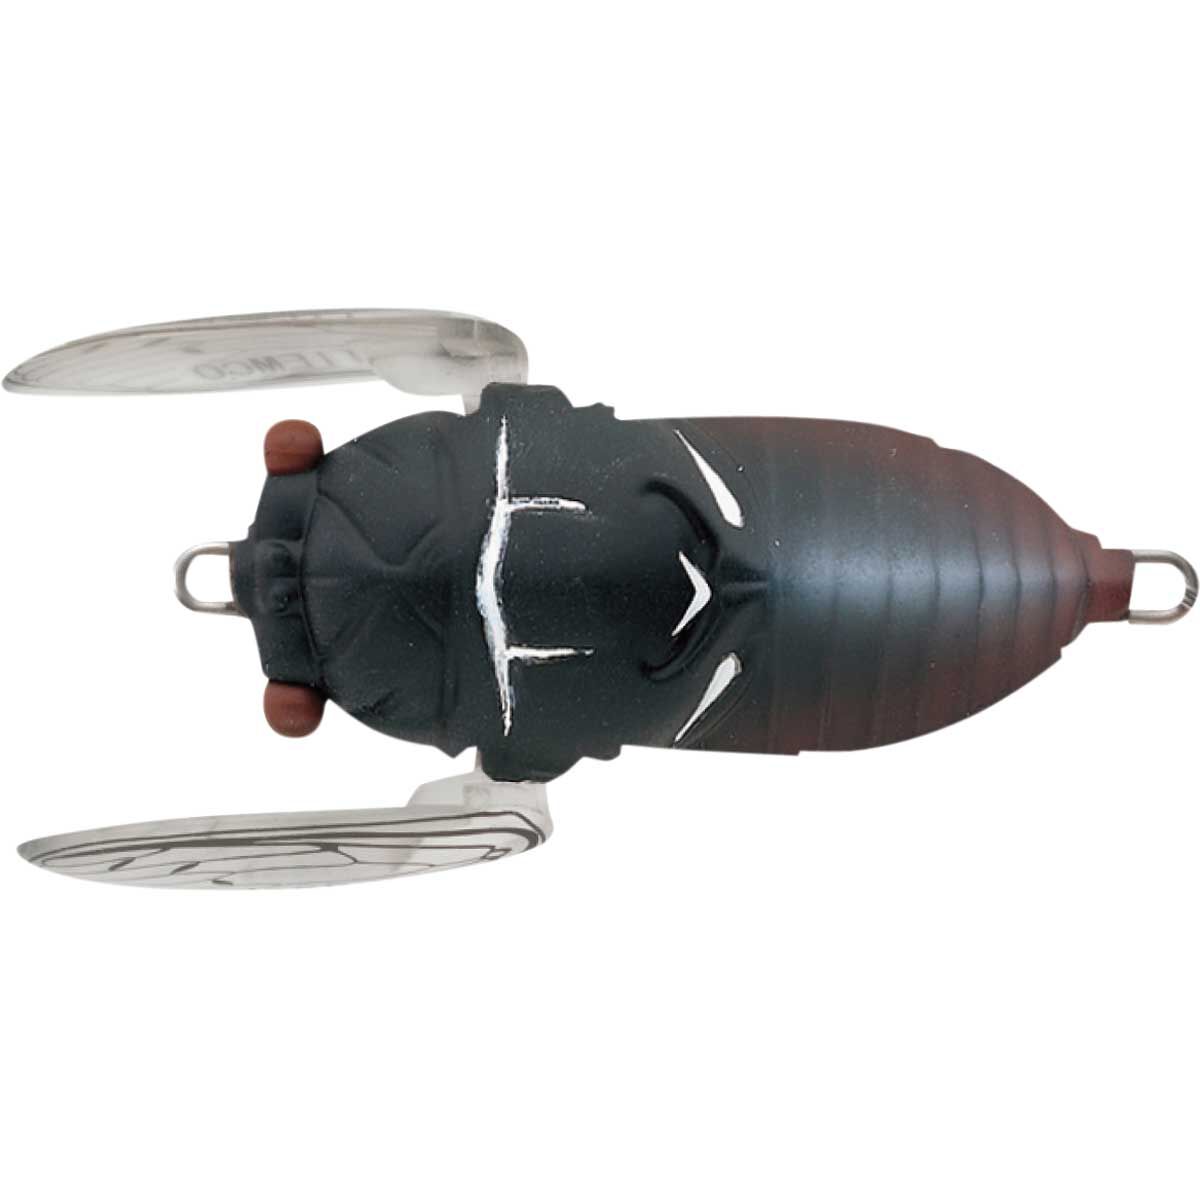 Tiemco Cicada Soft Shell Surface Lure 40mm Black